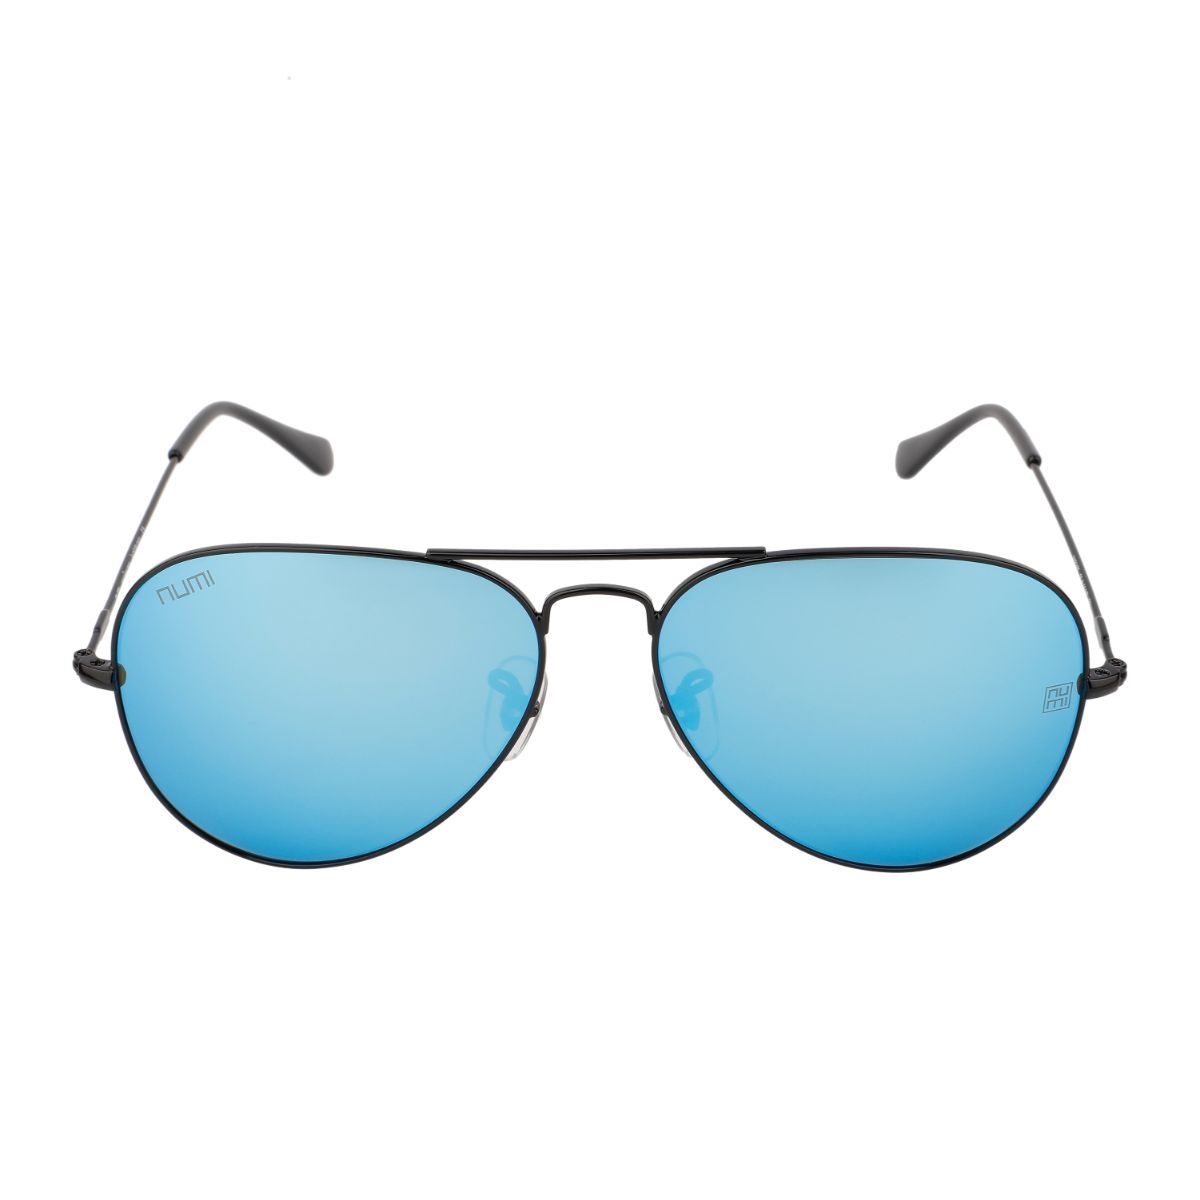 NUMI Blue Aviator UV Protected Sunglasses N18146SCL9